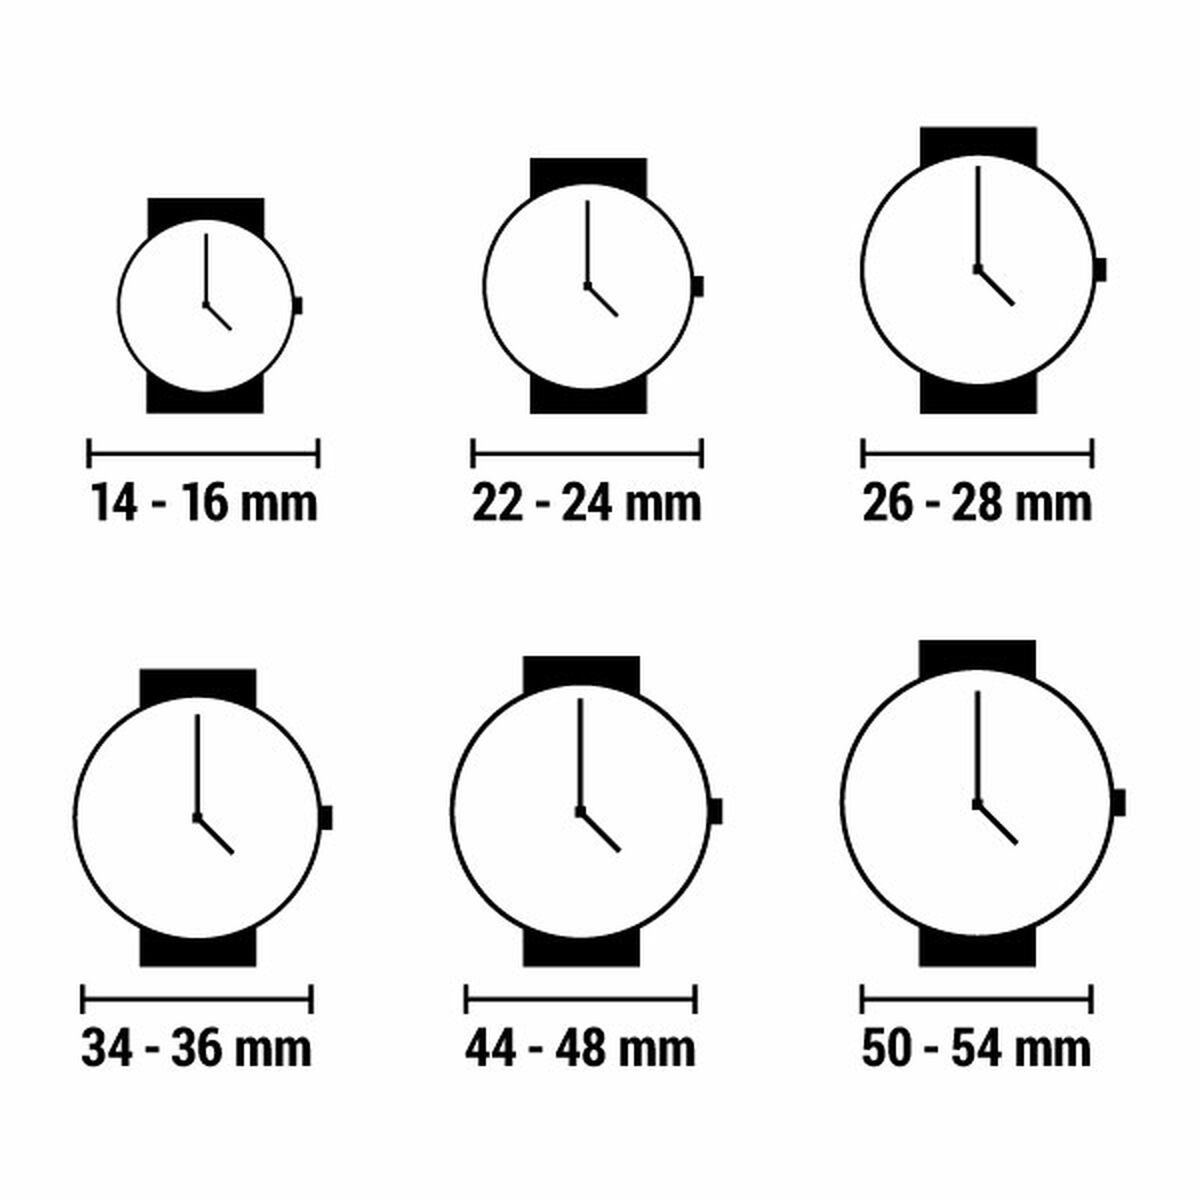 Horloge Dames Casio COLLECTION Gouden (Ø 35 mm)